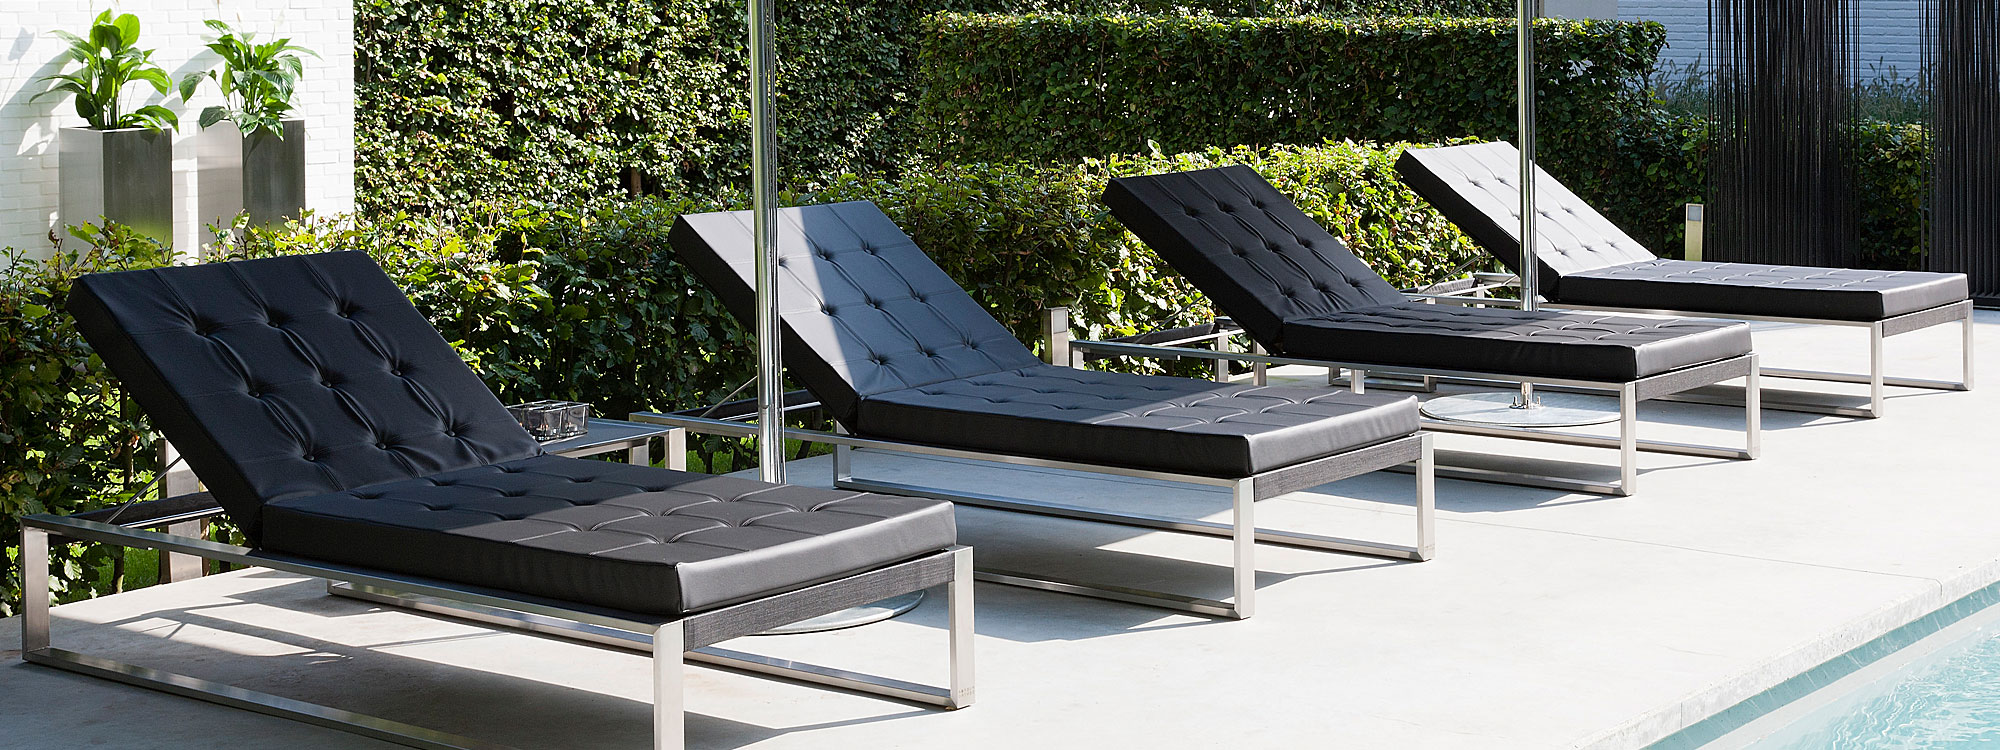 Siesta modern sun lounger is a minimalist sunbed in luxury garden sunbed materials by Encompass modern garden furniture London supplier